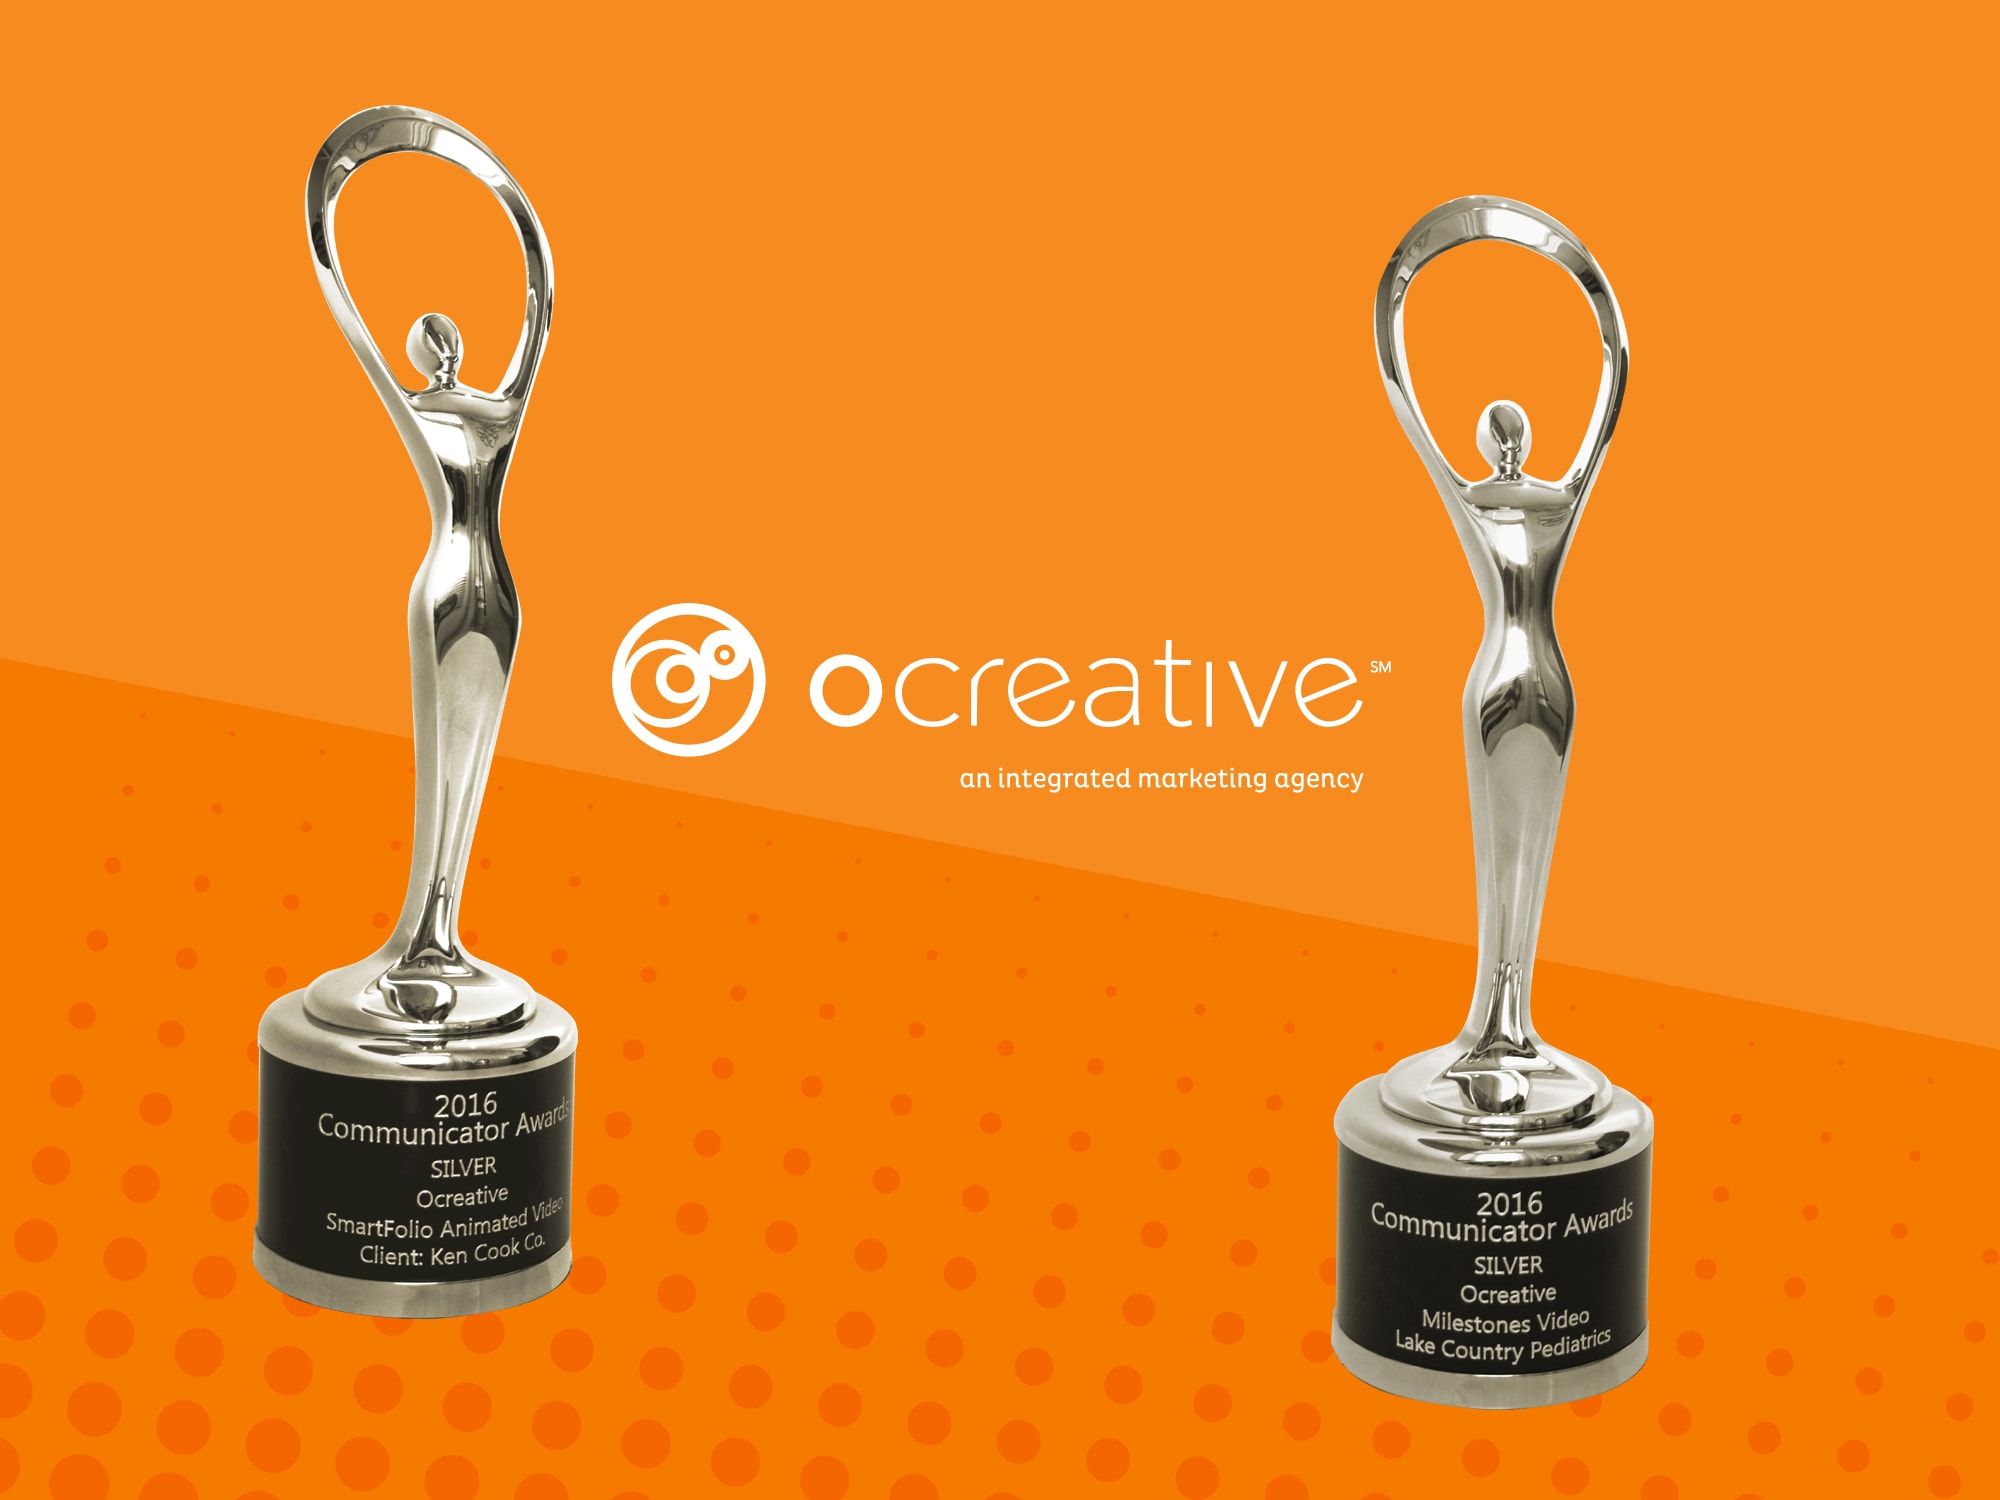 Ocreative - Award Winning Marketing Agency